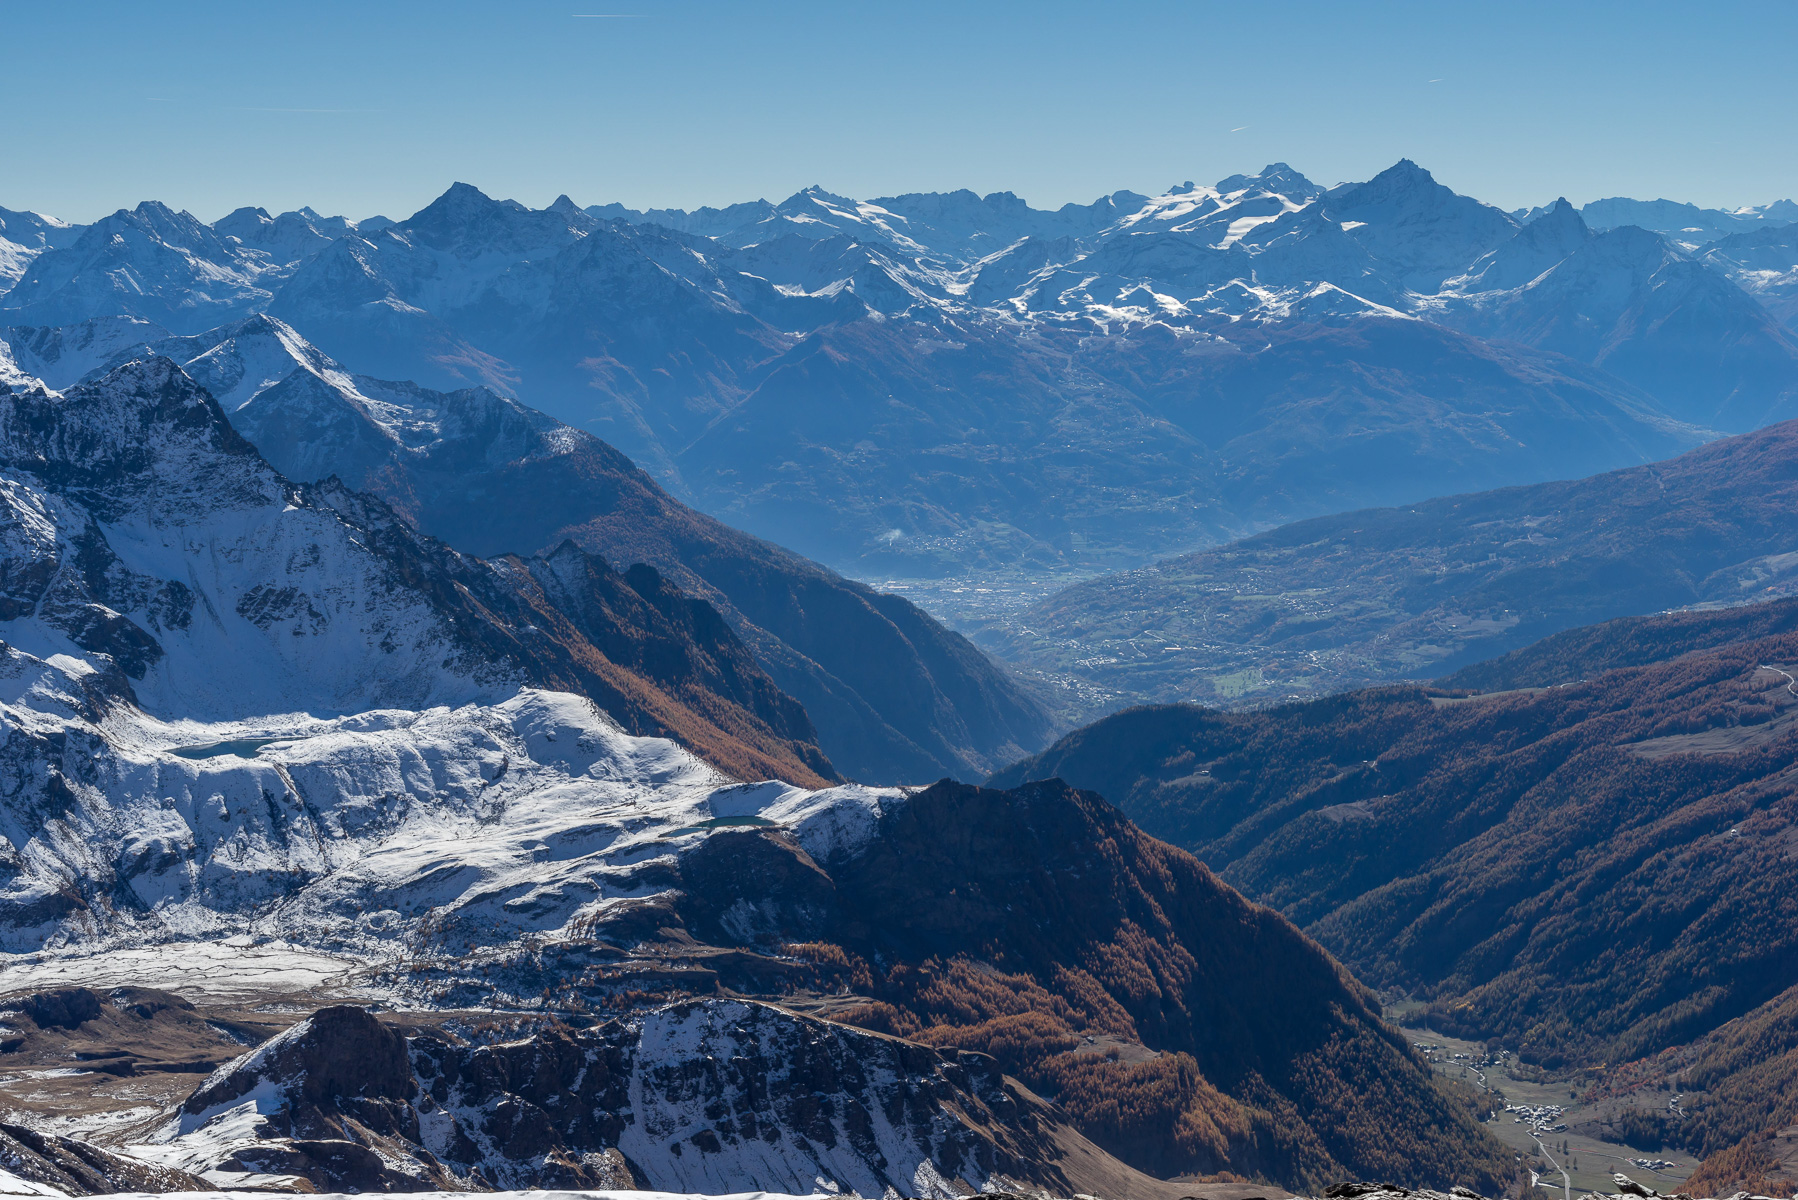 Blick über das Valle di Ollomont zum Aostatal mit Monte Emilius und Gran Paradiso.